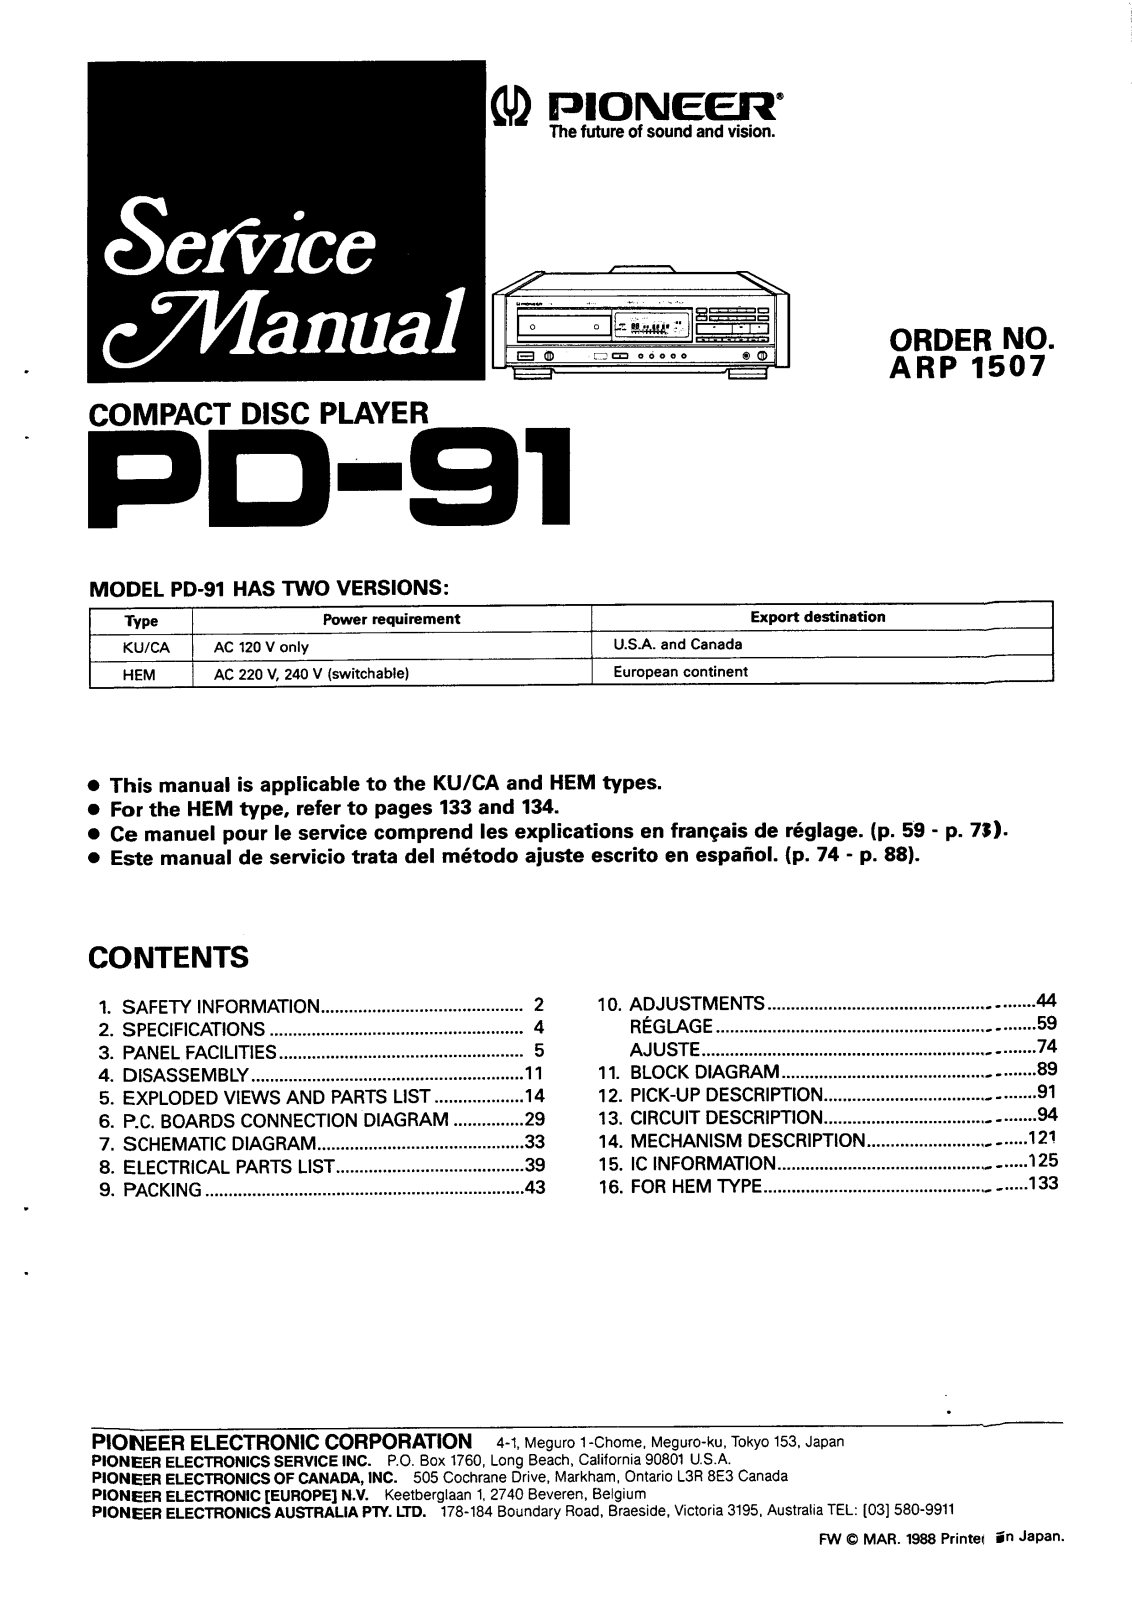 Pioneer PD-91 Service manual